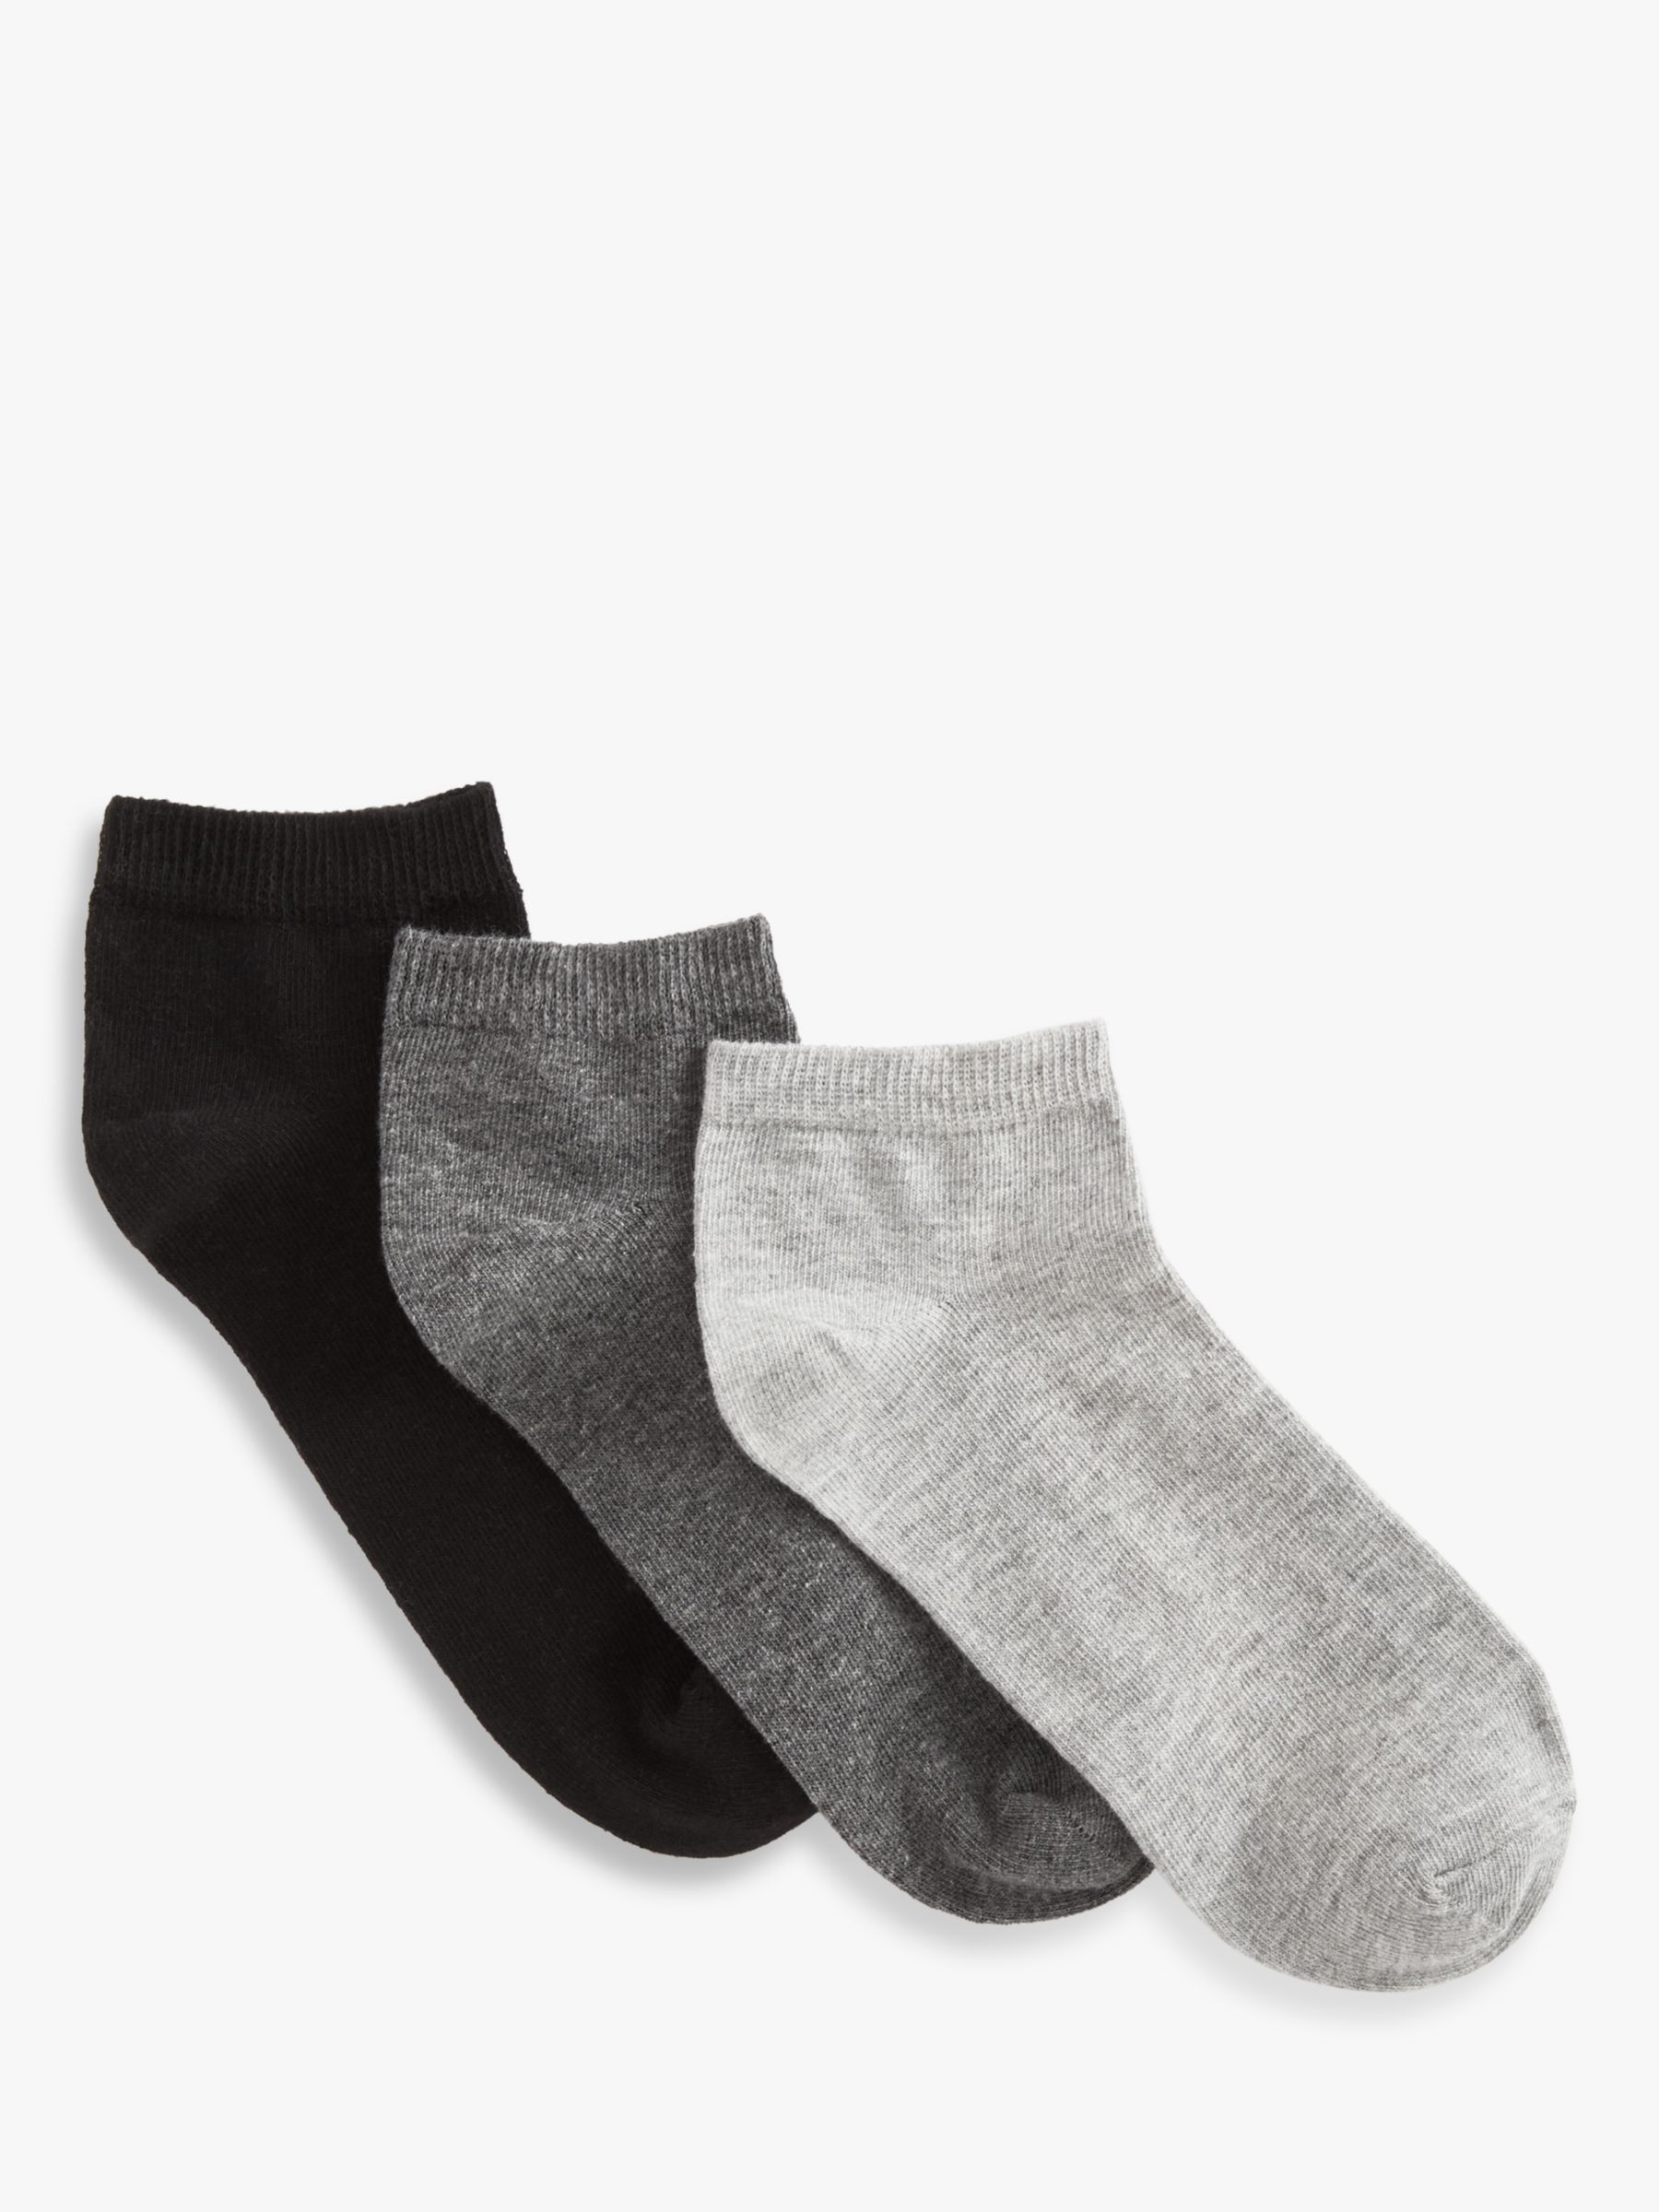 John Lewis Trainer Socks, Pack of 3, Mono at John Lewis & Partners